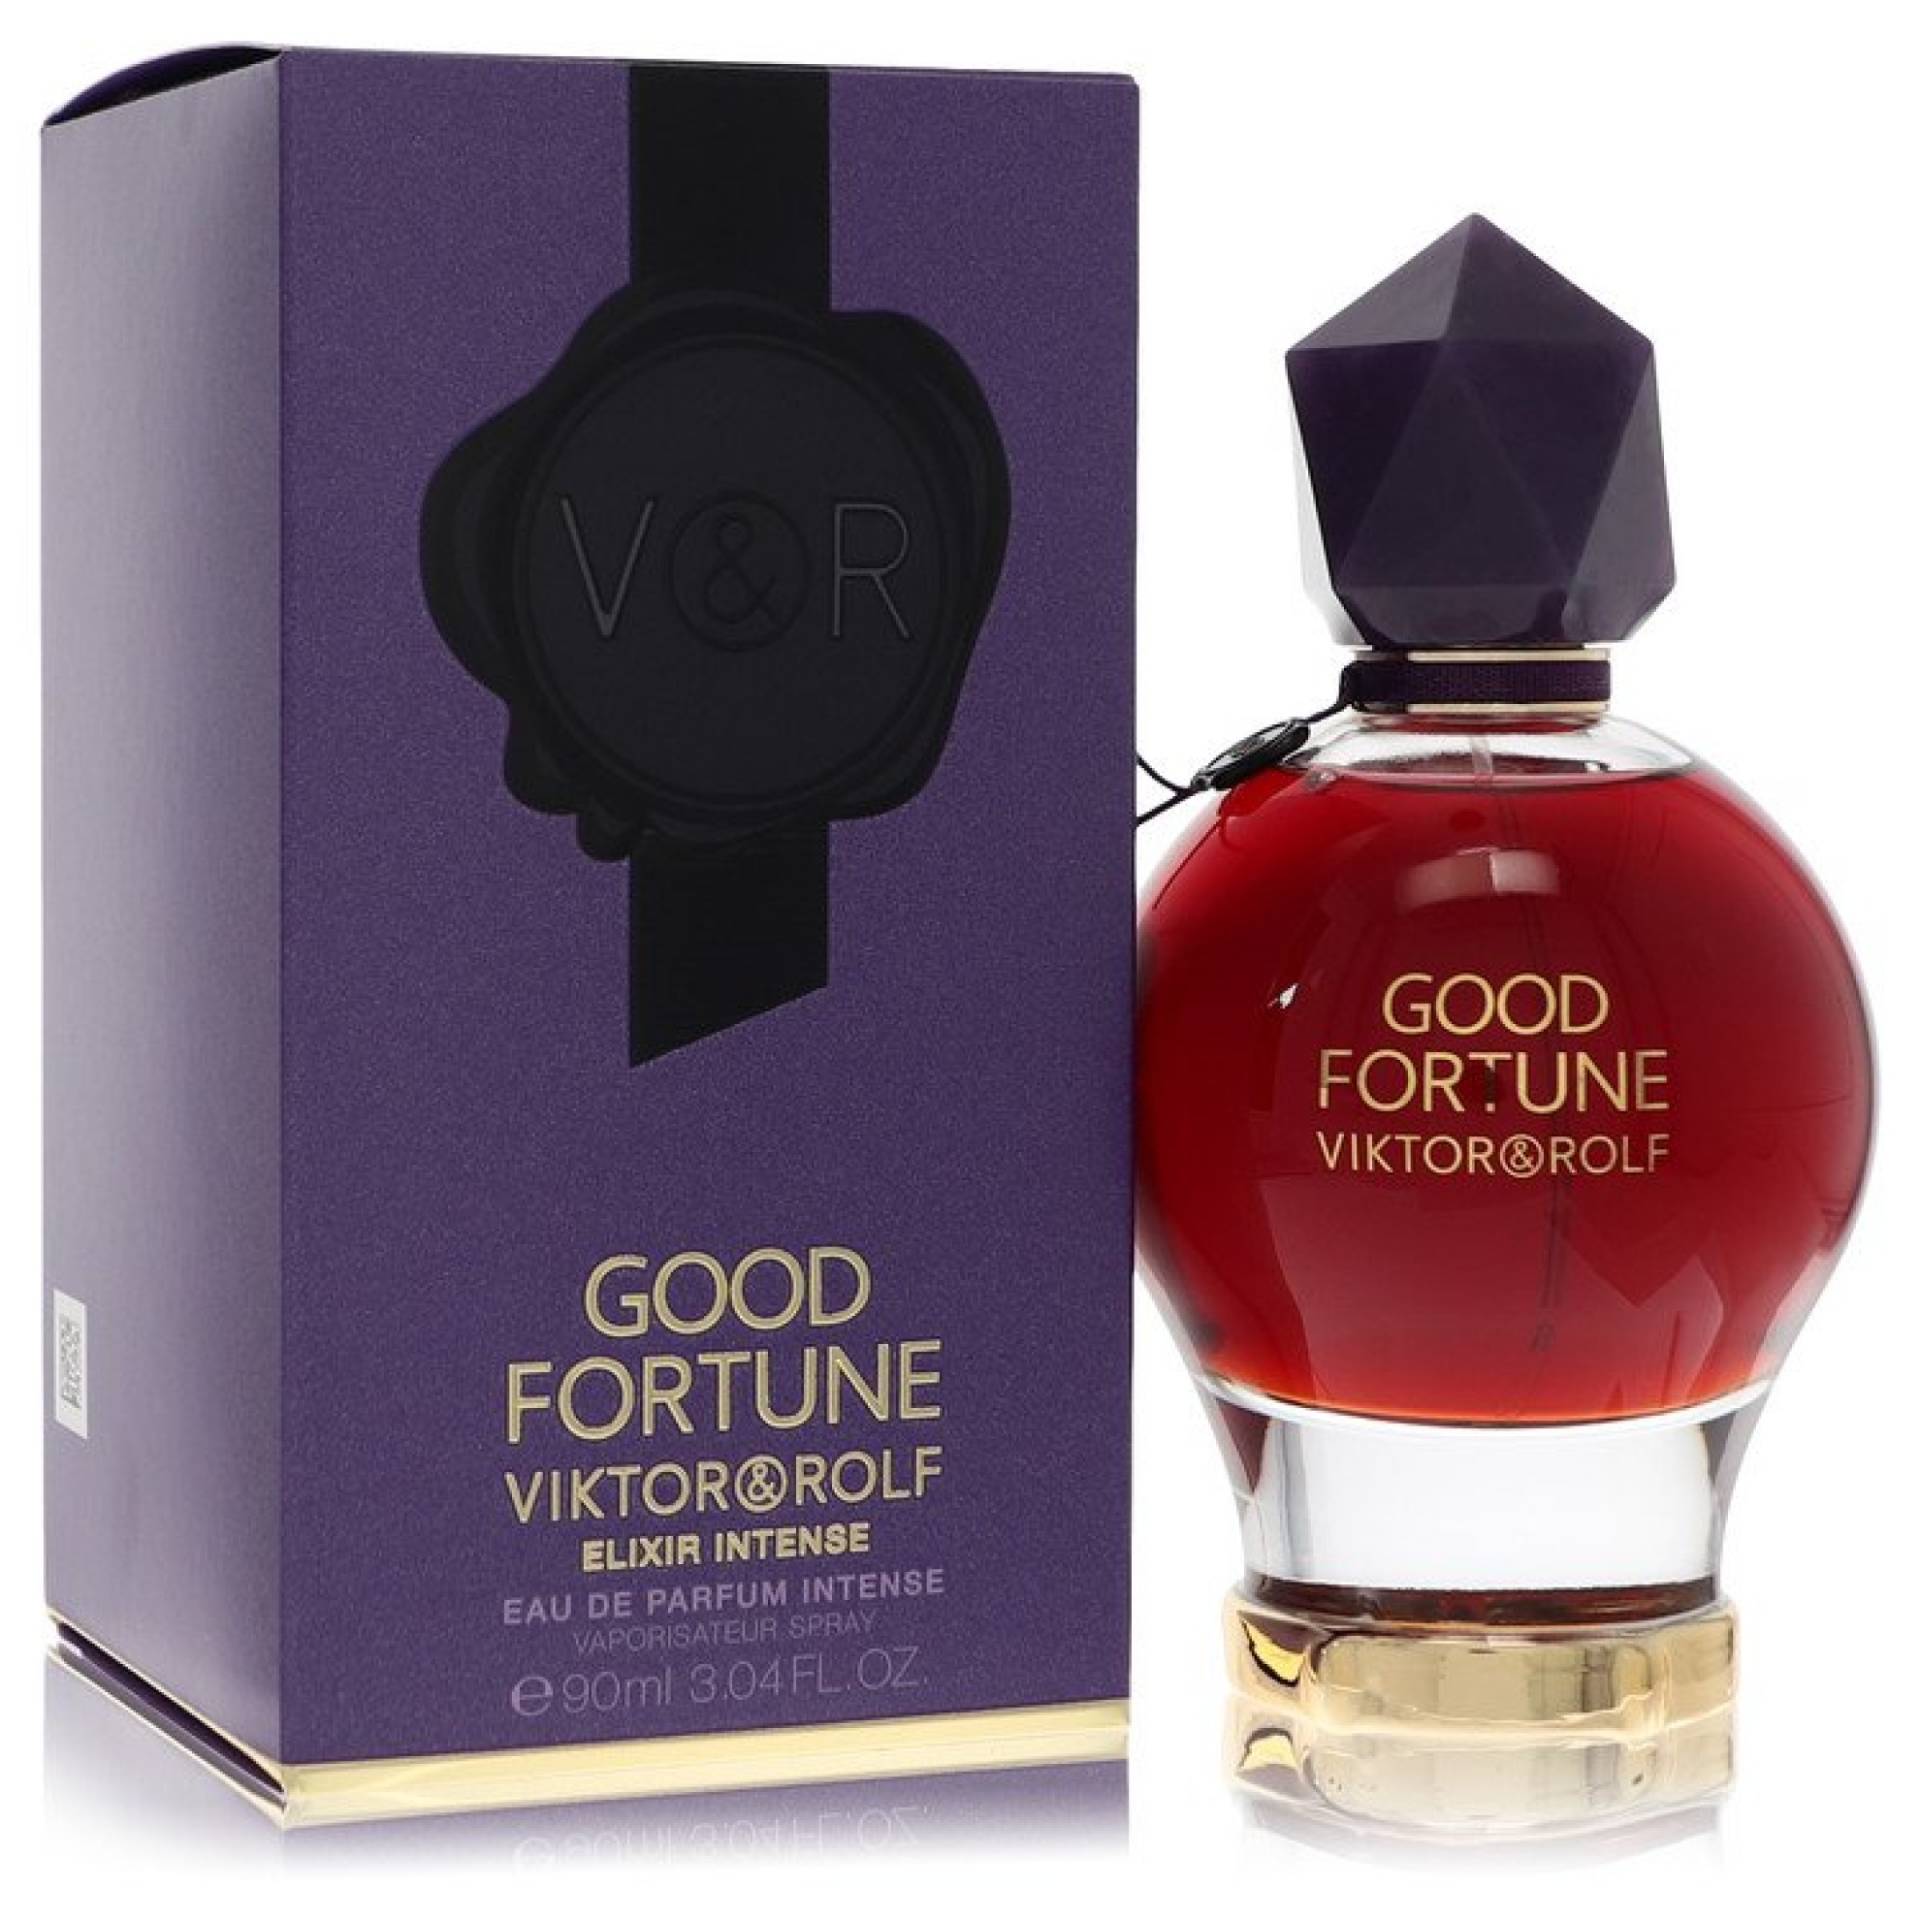 Viktor & Rolf Good Fortune Elixir Intense Eau De Parfum Intense Spray 89 ml von Viktor & Rolf